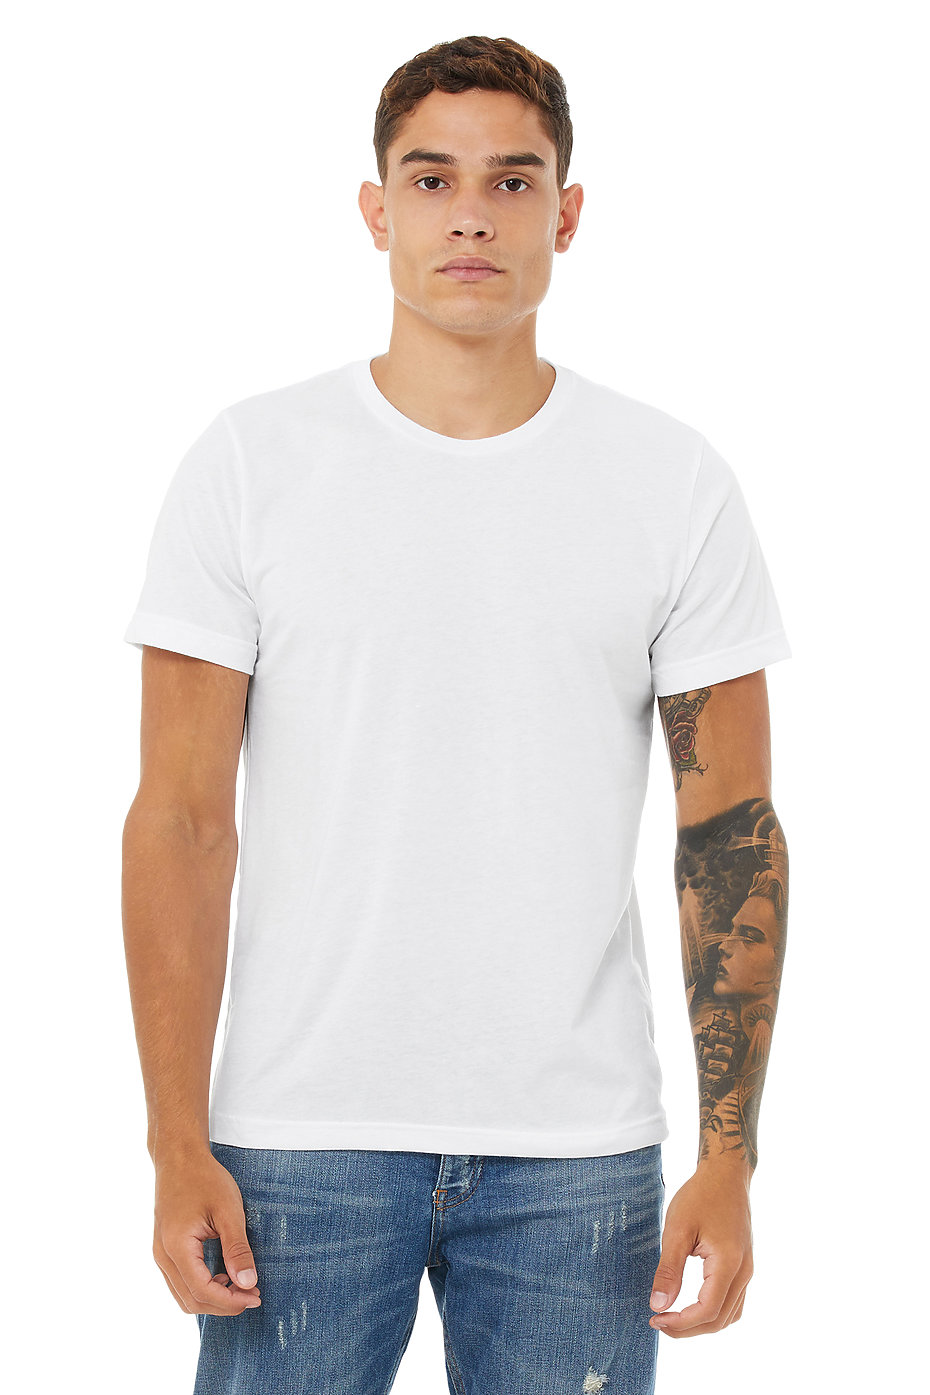 Springfield Shirt discount 52% MEN FASHION Shirts & T-shirts Custom fit Green M 